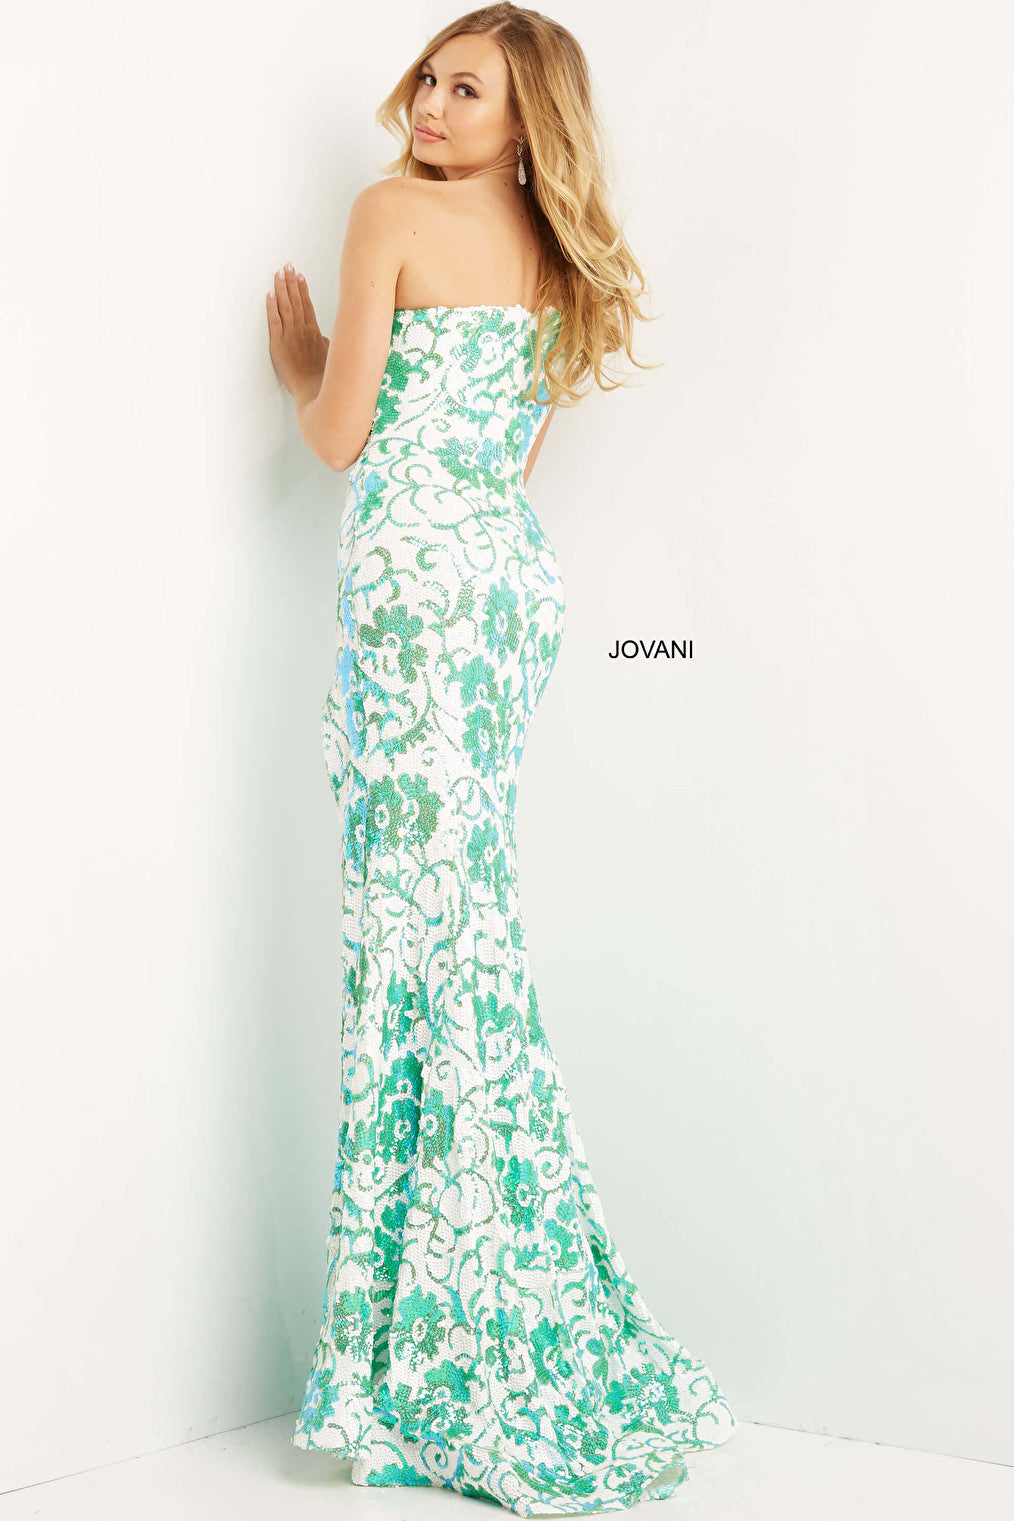 Floral sequin Jovani prom dress 08256